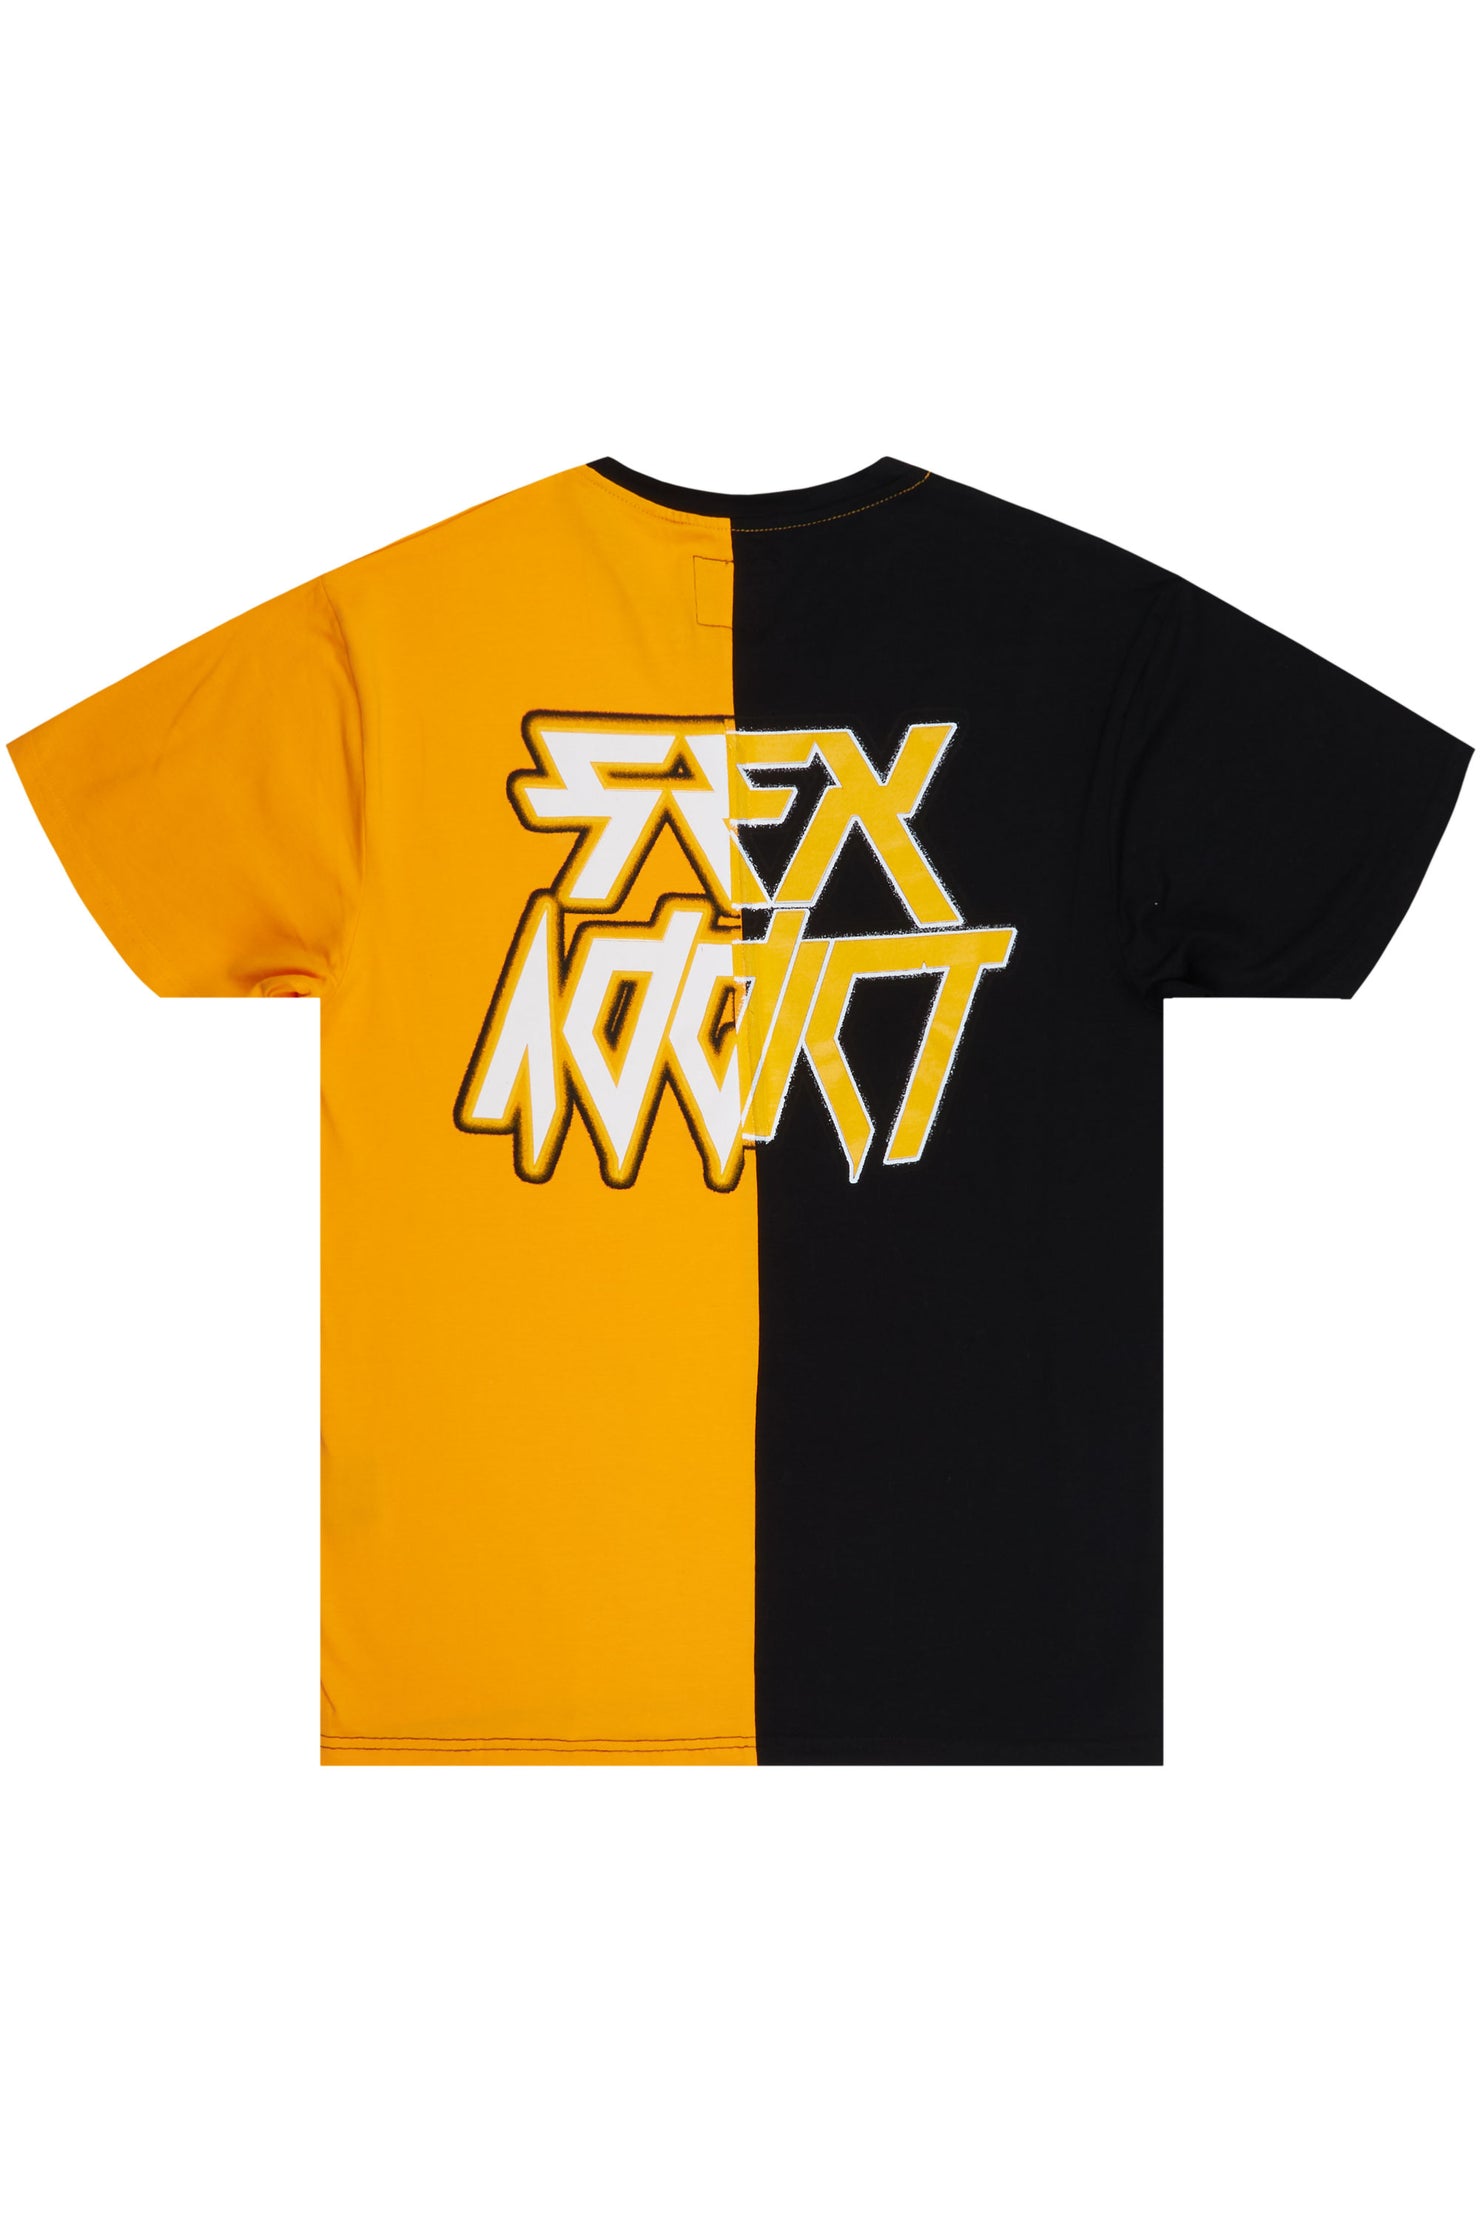 Troy Black/Orange Graphic T-Shirt